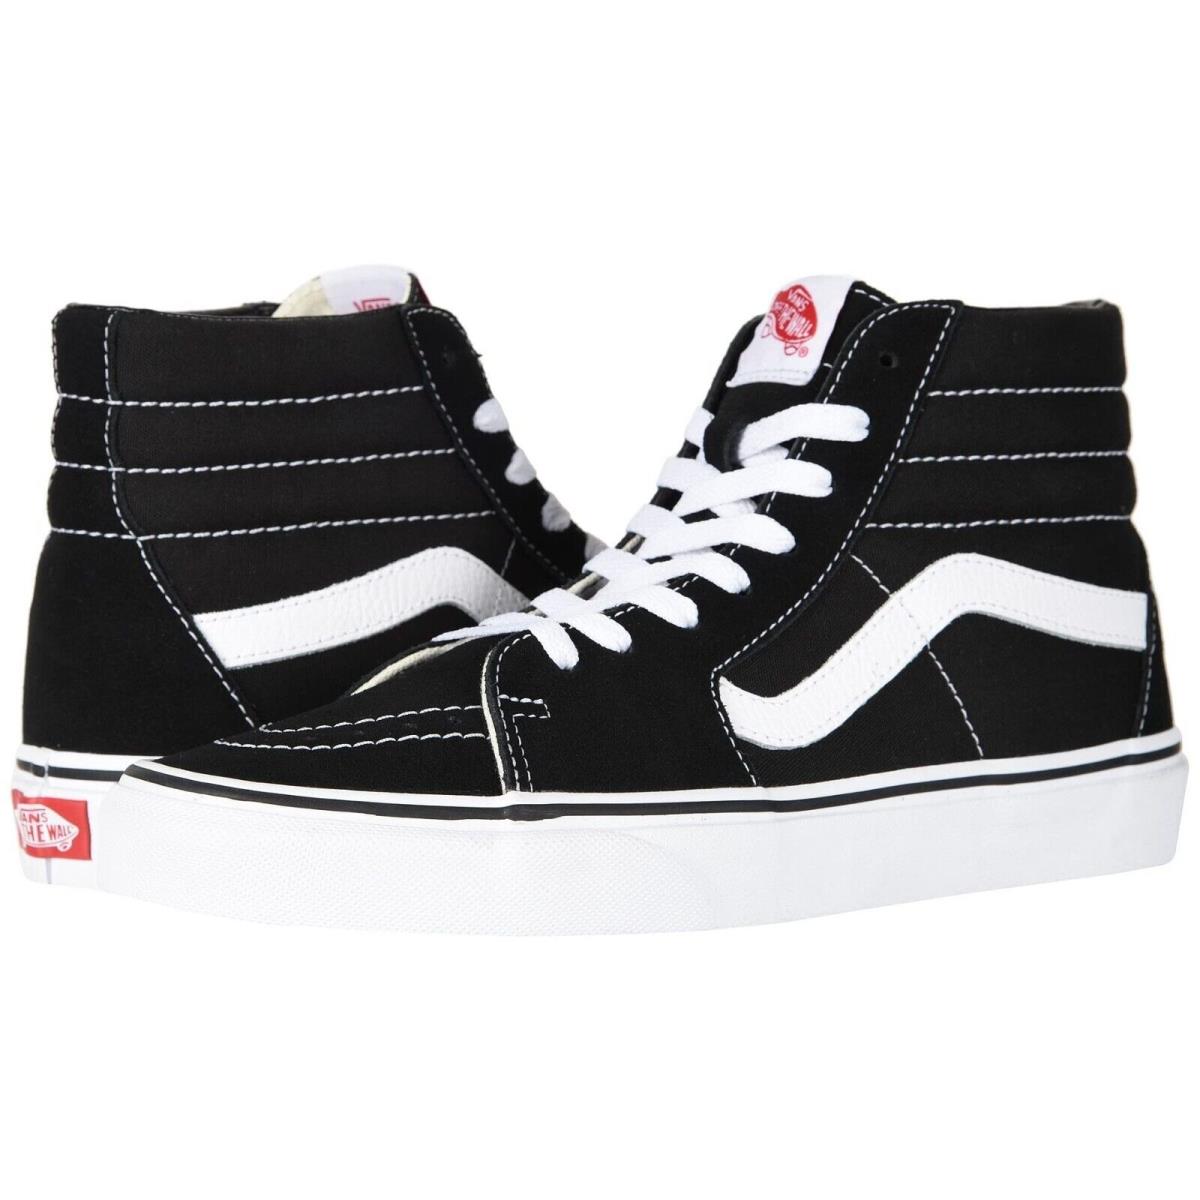 Vans SK8-Hi N7717 Unisex Sneaker Black/black/white Size W -7/ M -5.5